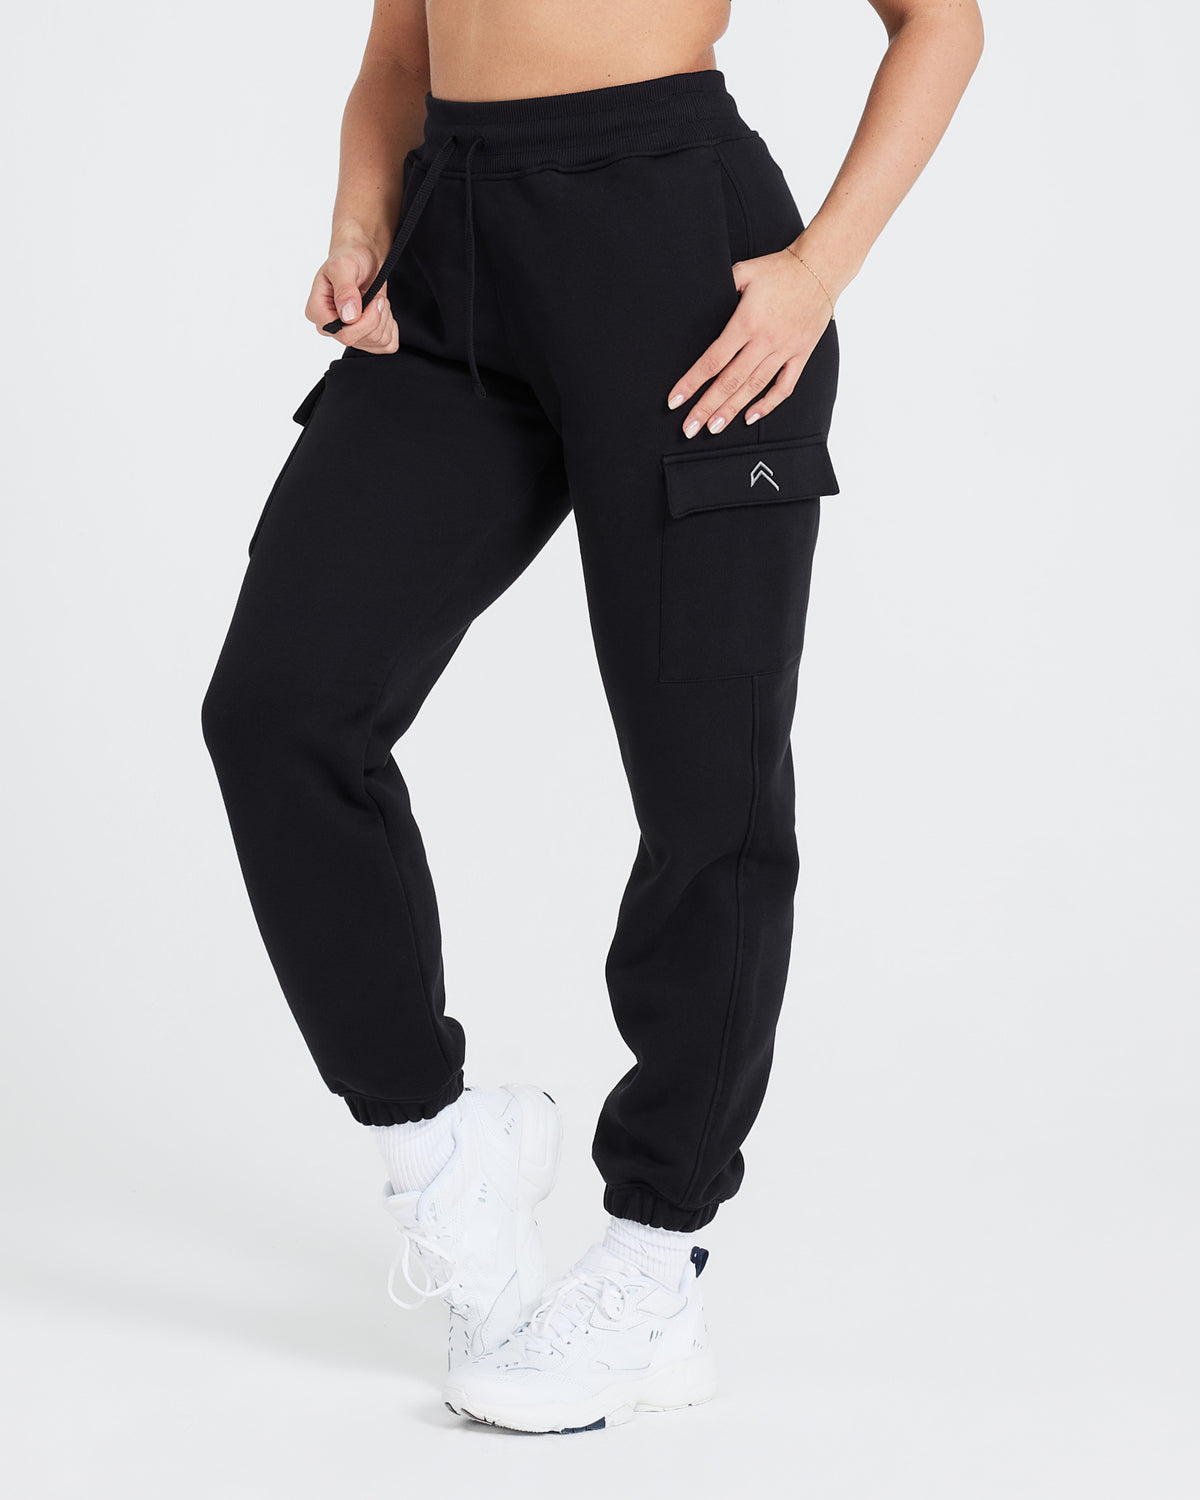 Ladies Black Joggers - Front Zip Pockets